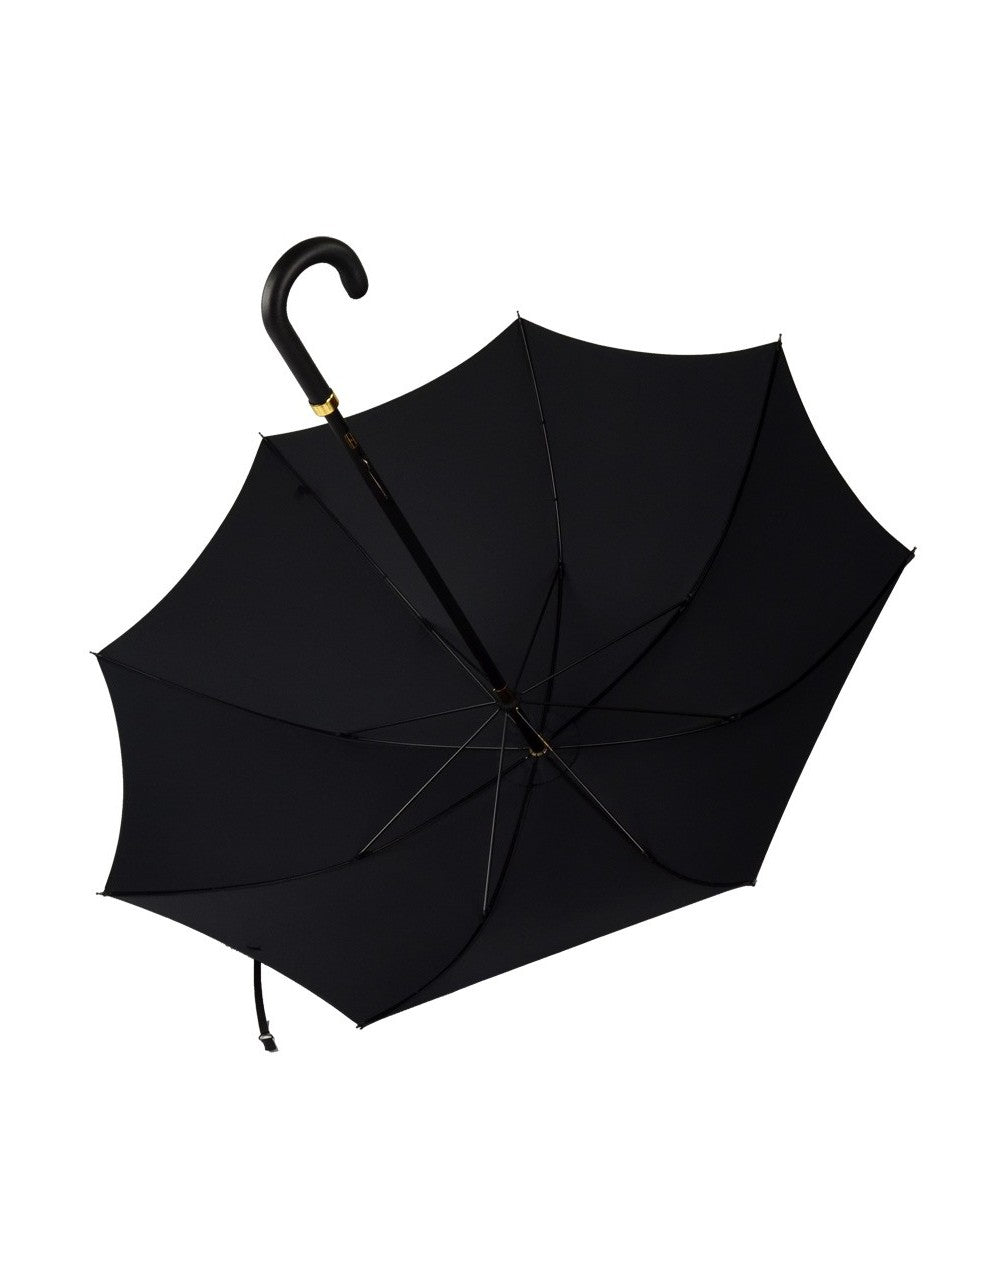 Fox Bespoke British Umbrellas | Leather Handle Gent's Umbrella | Slender Metal Shaft | Cambridge Umbrella | Hand-Stitched Leather | Enjoy the Rain!